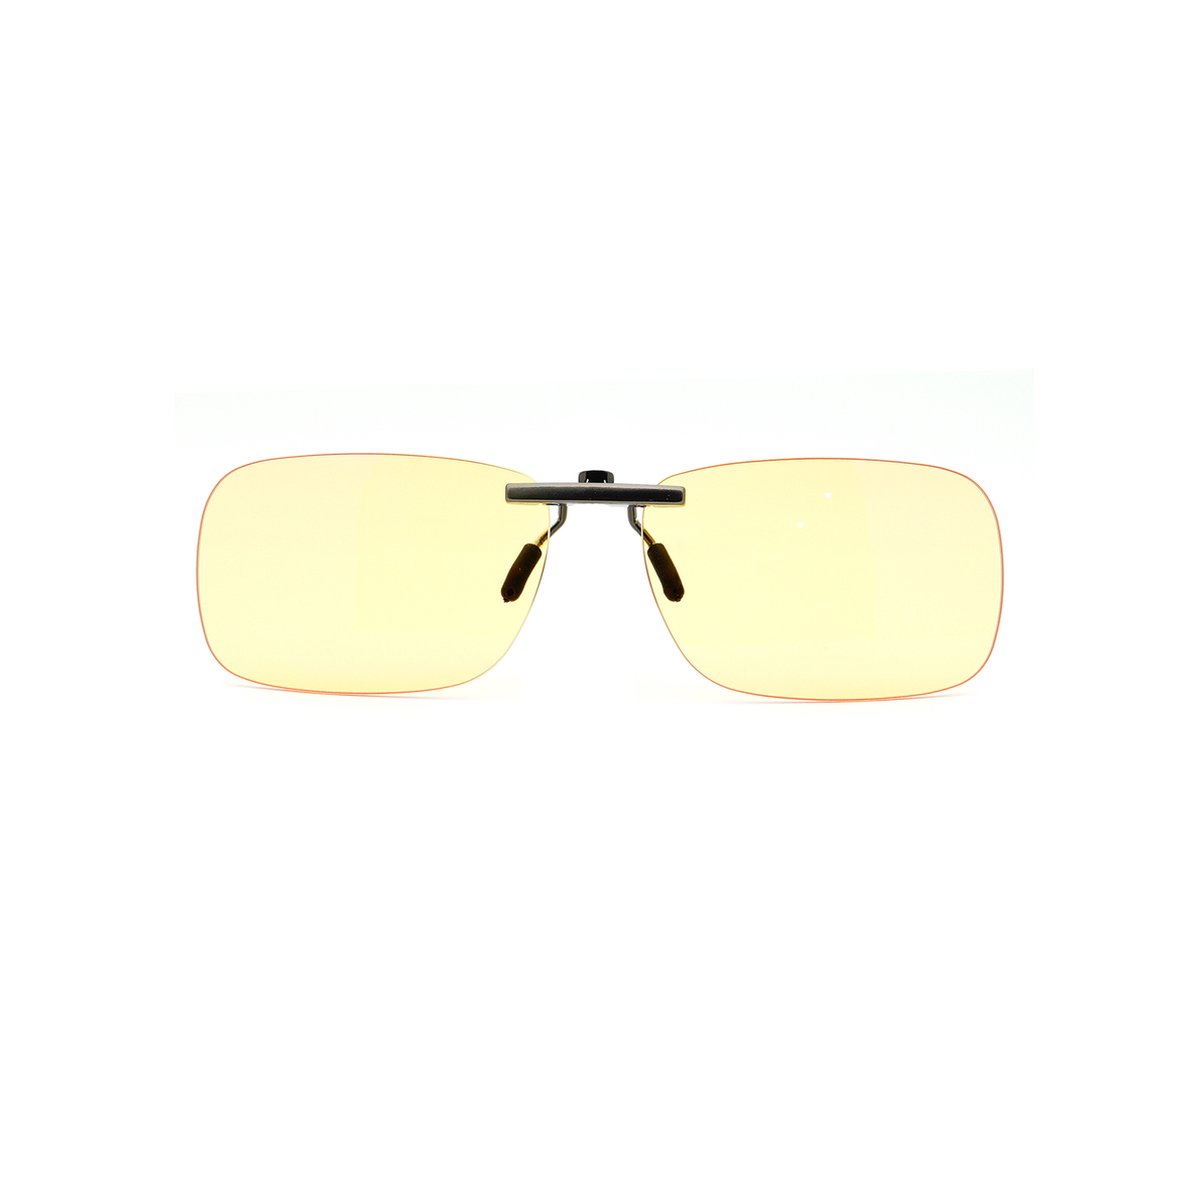 Nachtbril Auto - Overzetbril - Opzetbril Nacht - Clip On - Geel -  Gepolariseerd | bol.com